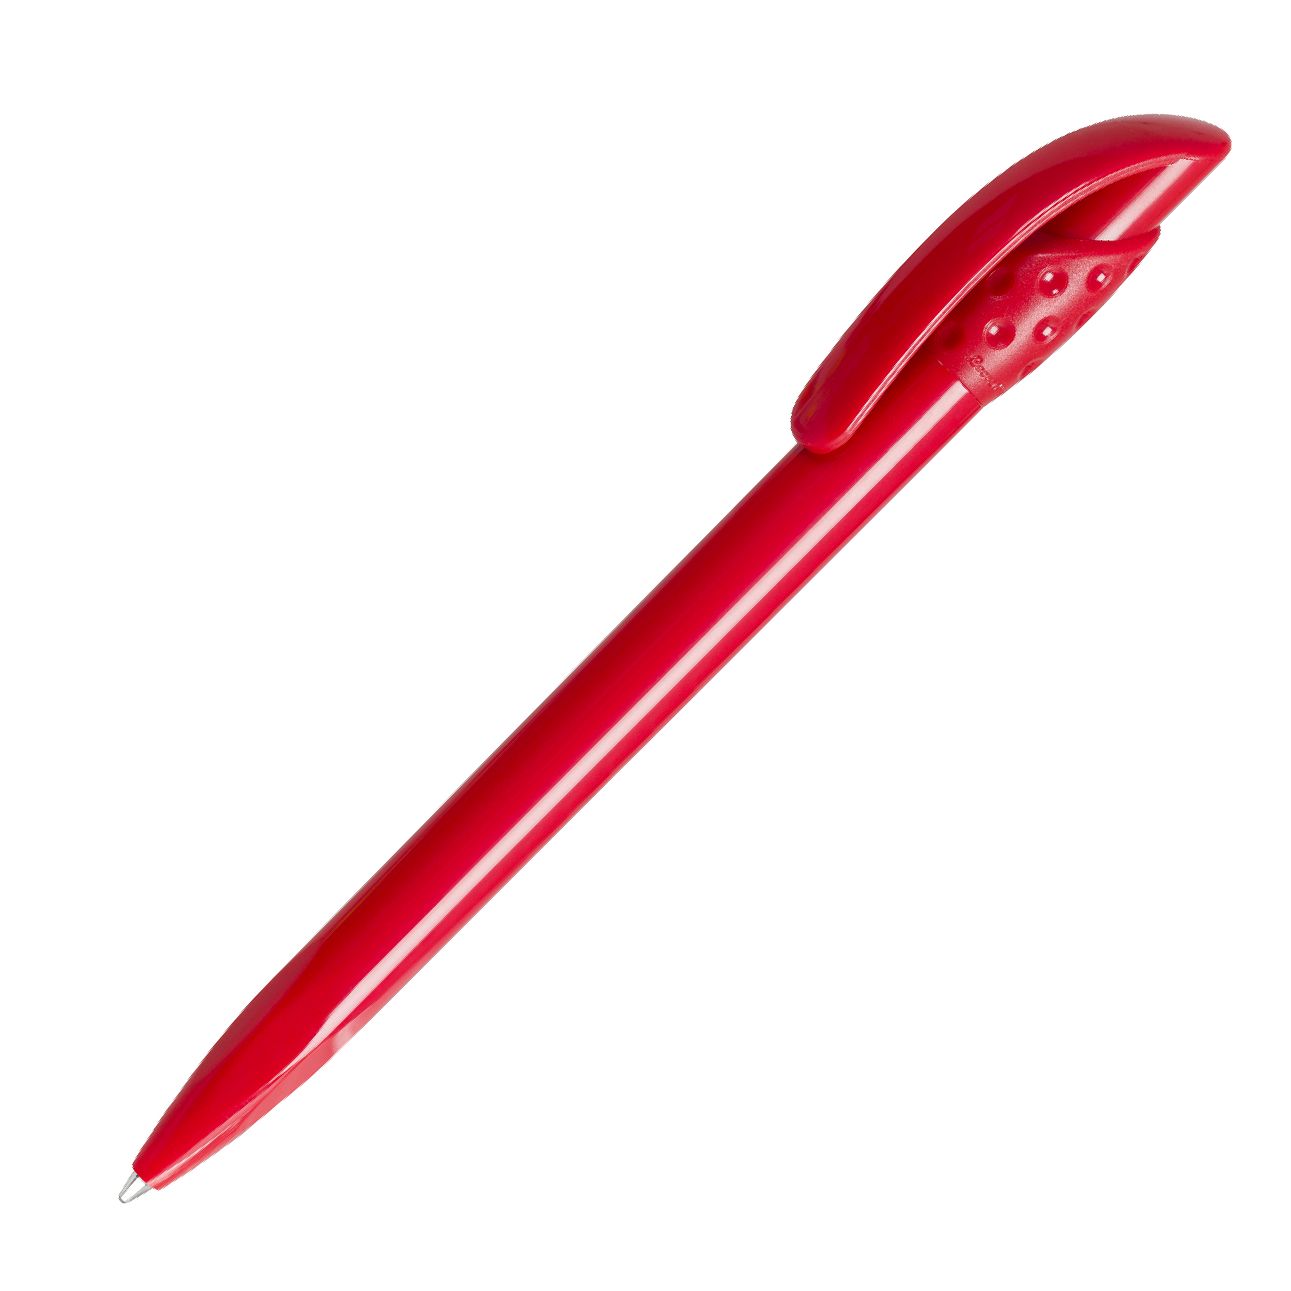 Am the pens red. Lecce Pen ручки шариковая. Twin, ручка шариковая, белый/красный, пластик. Ручка шариковая Venus, красная. Ручка шариковая пластмассовая розовая.